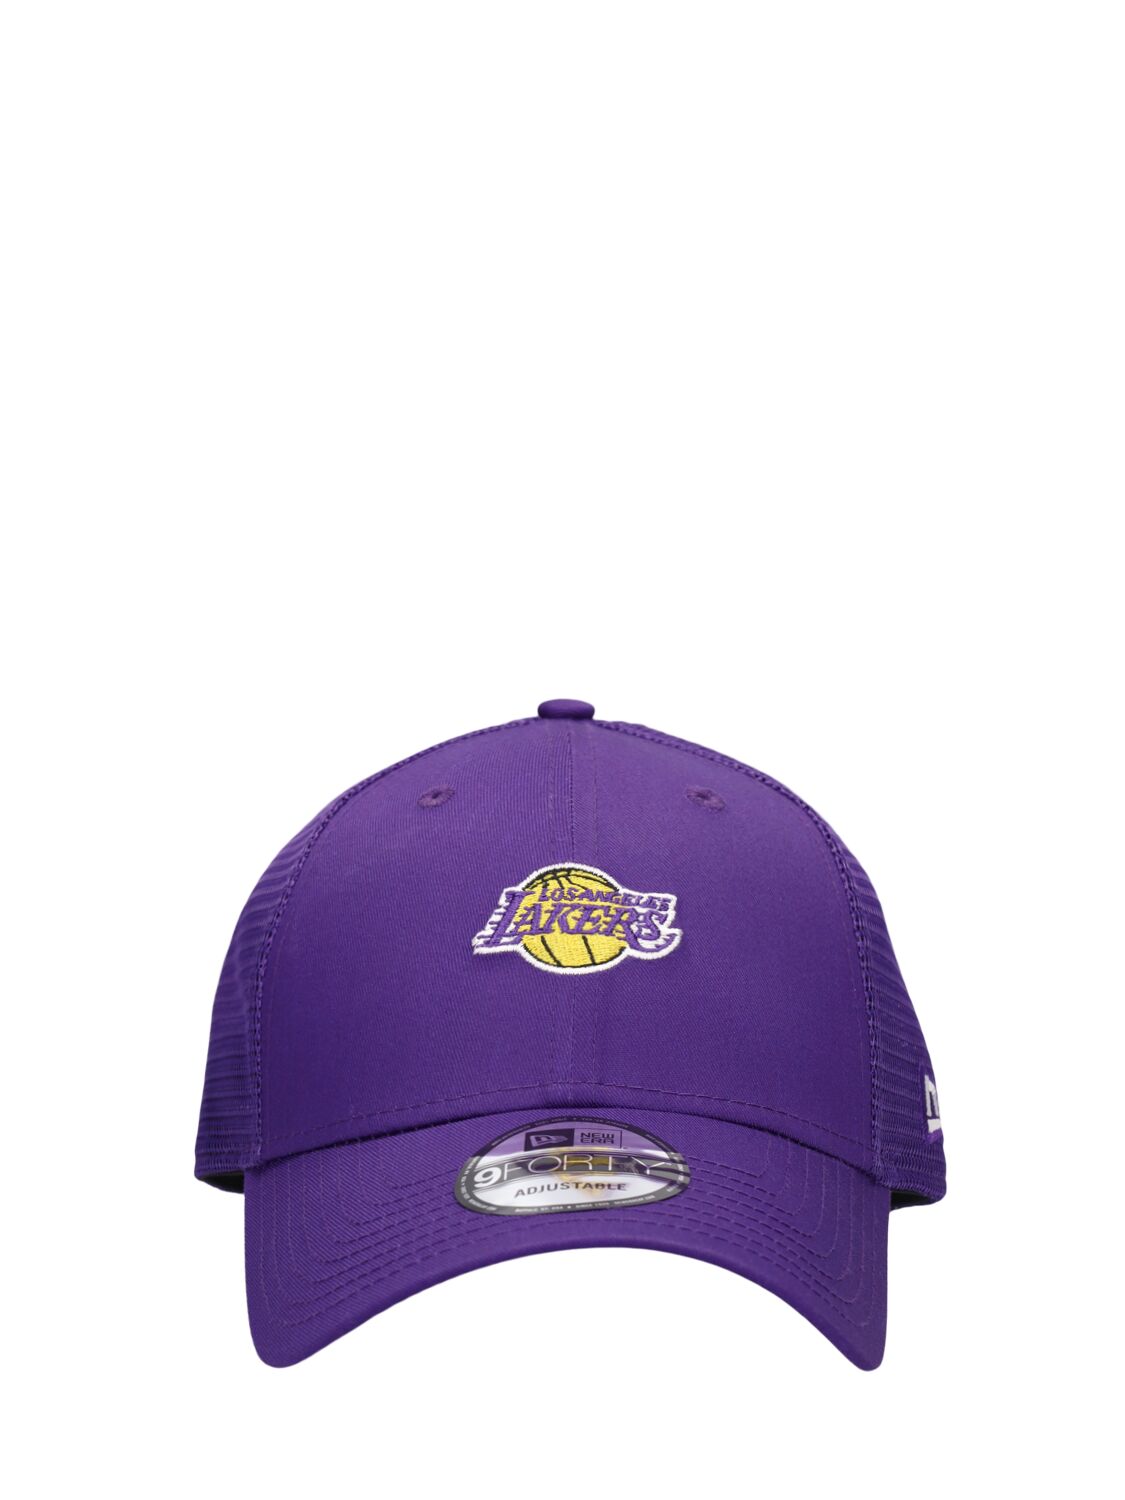 New Era La Lakers 9forty卡车司机帽 In Purple,yellow